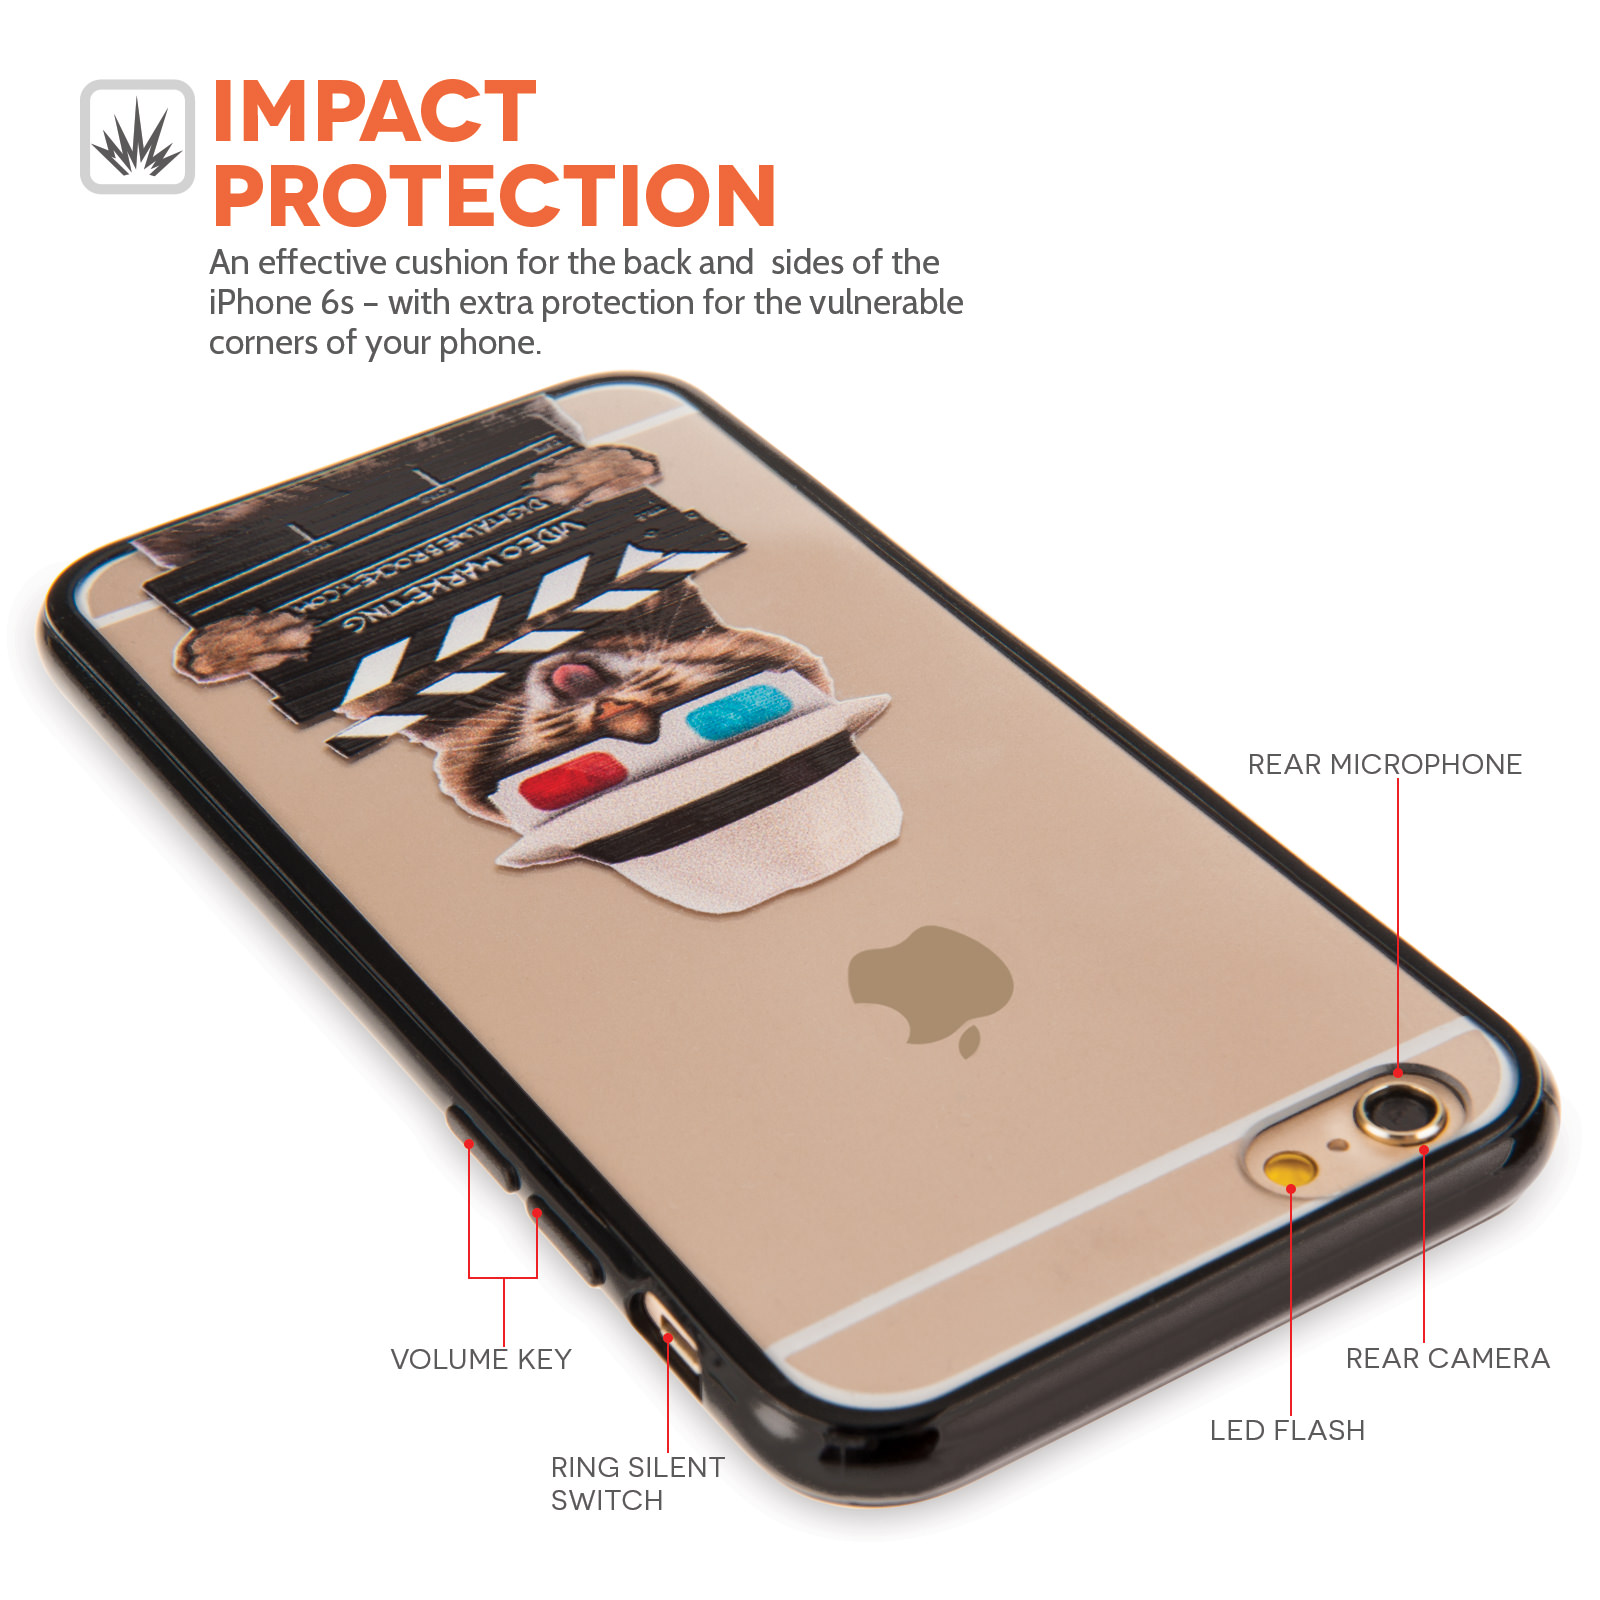 Yousave Accessories iPhone 6 and 6s Fun Case - Film Cat Design